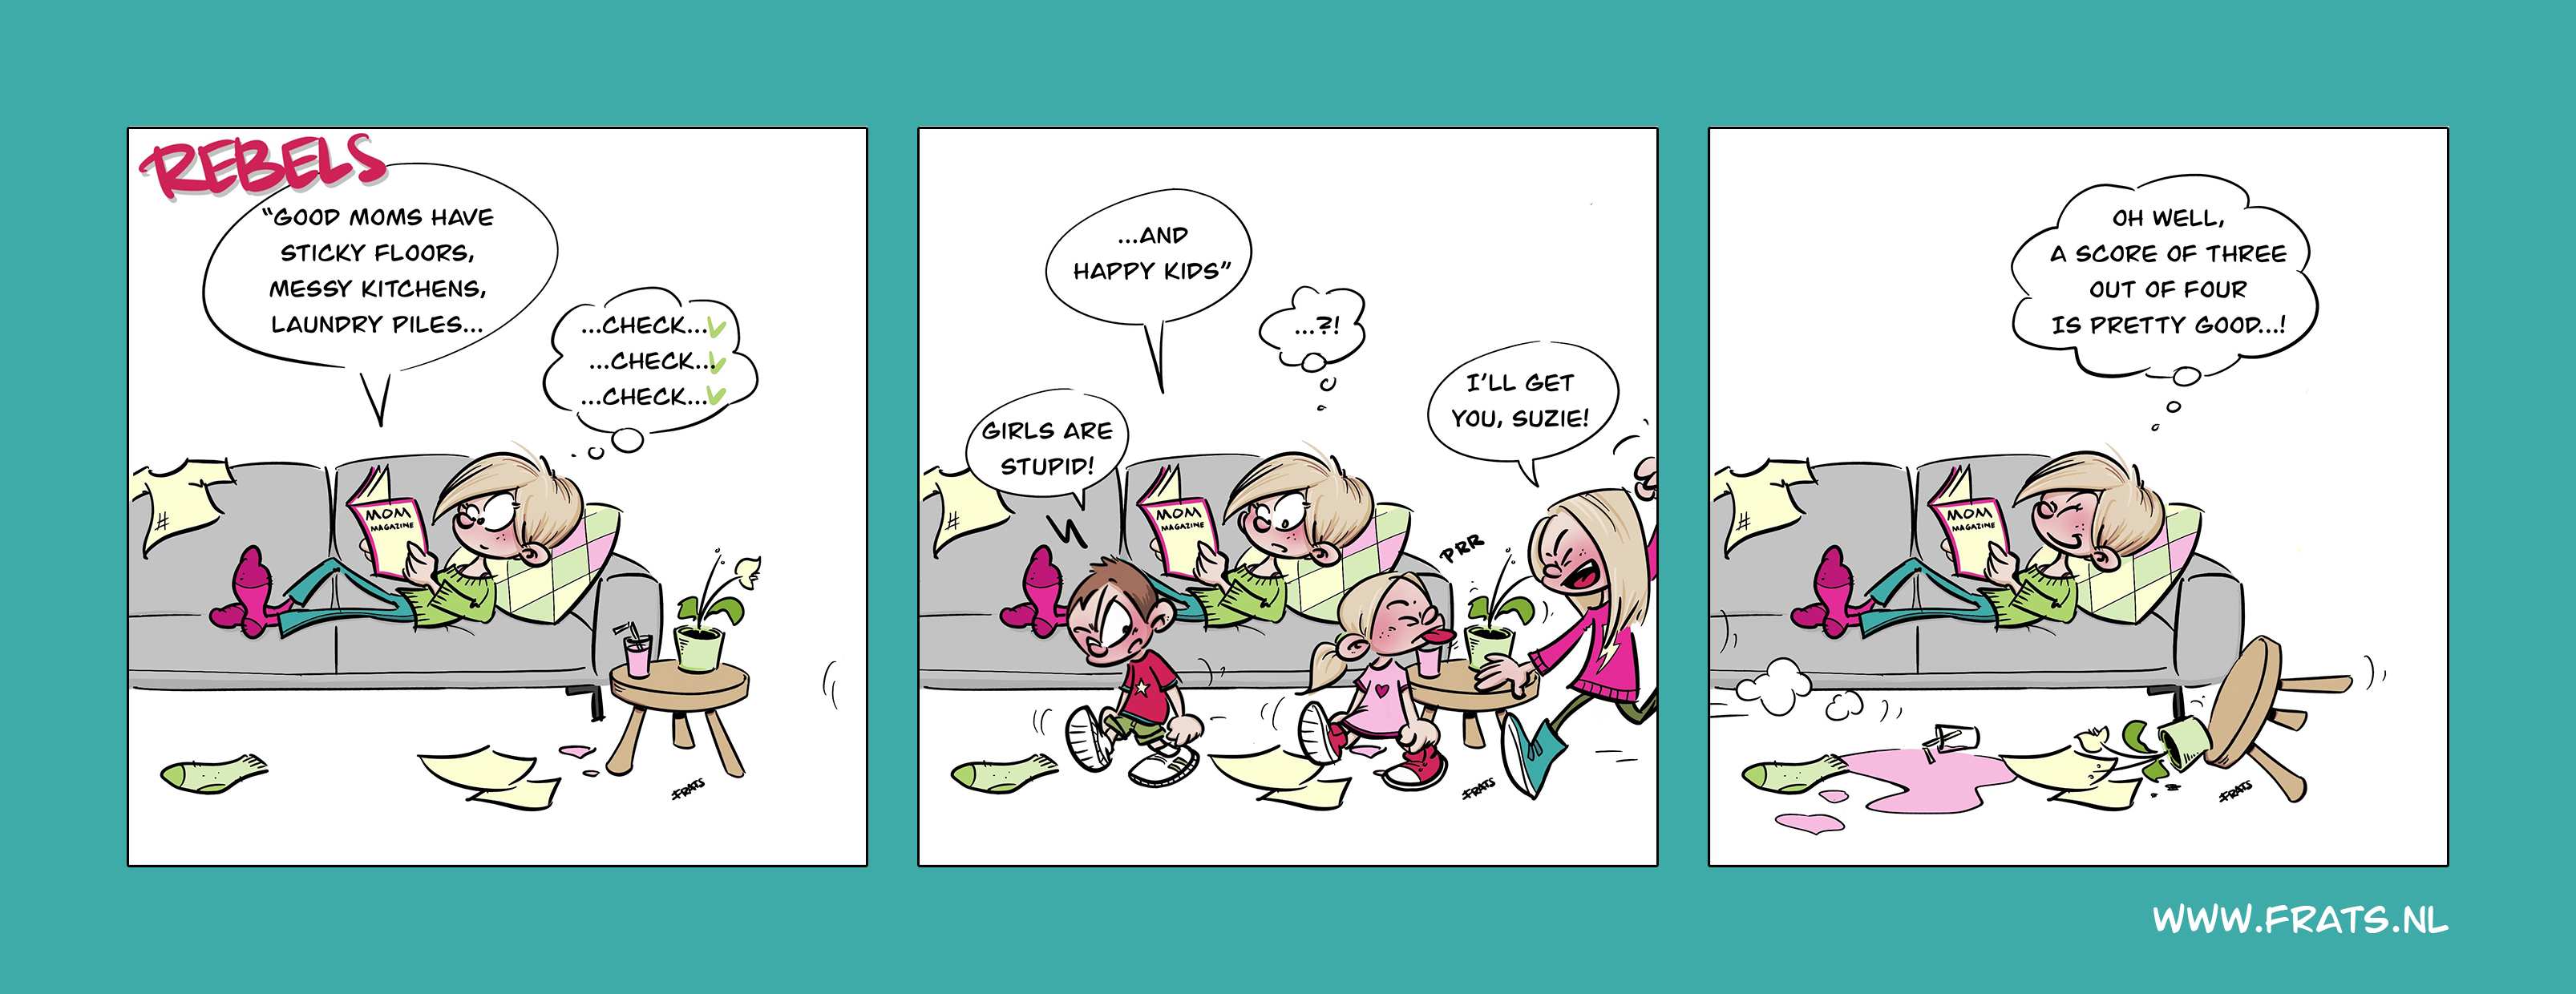 Rebels comic strip about good moms